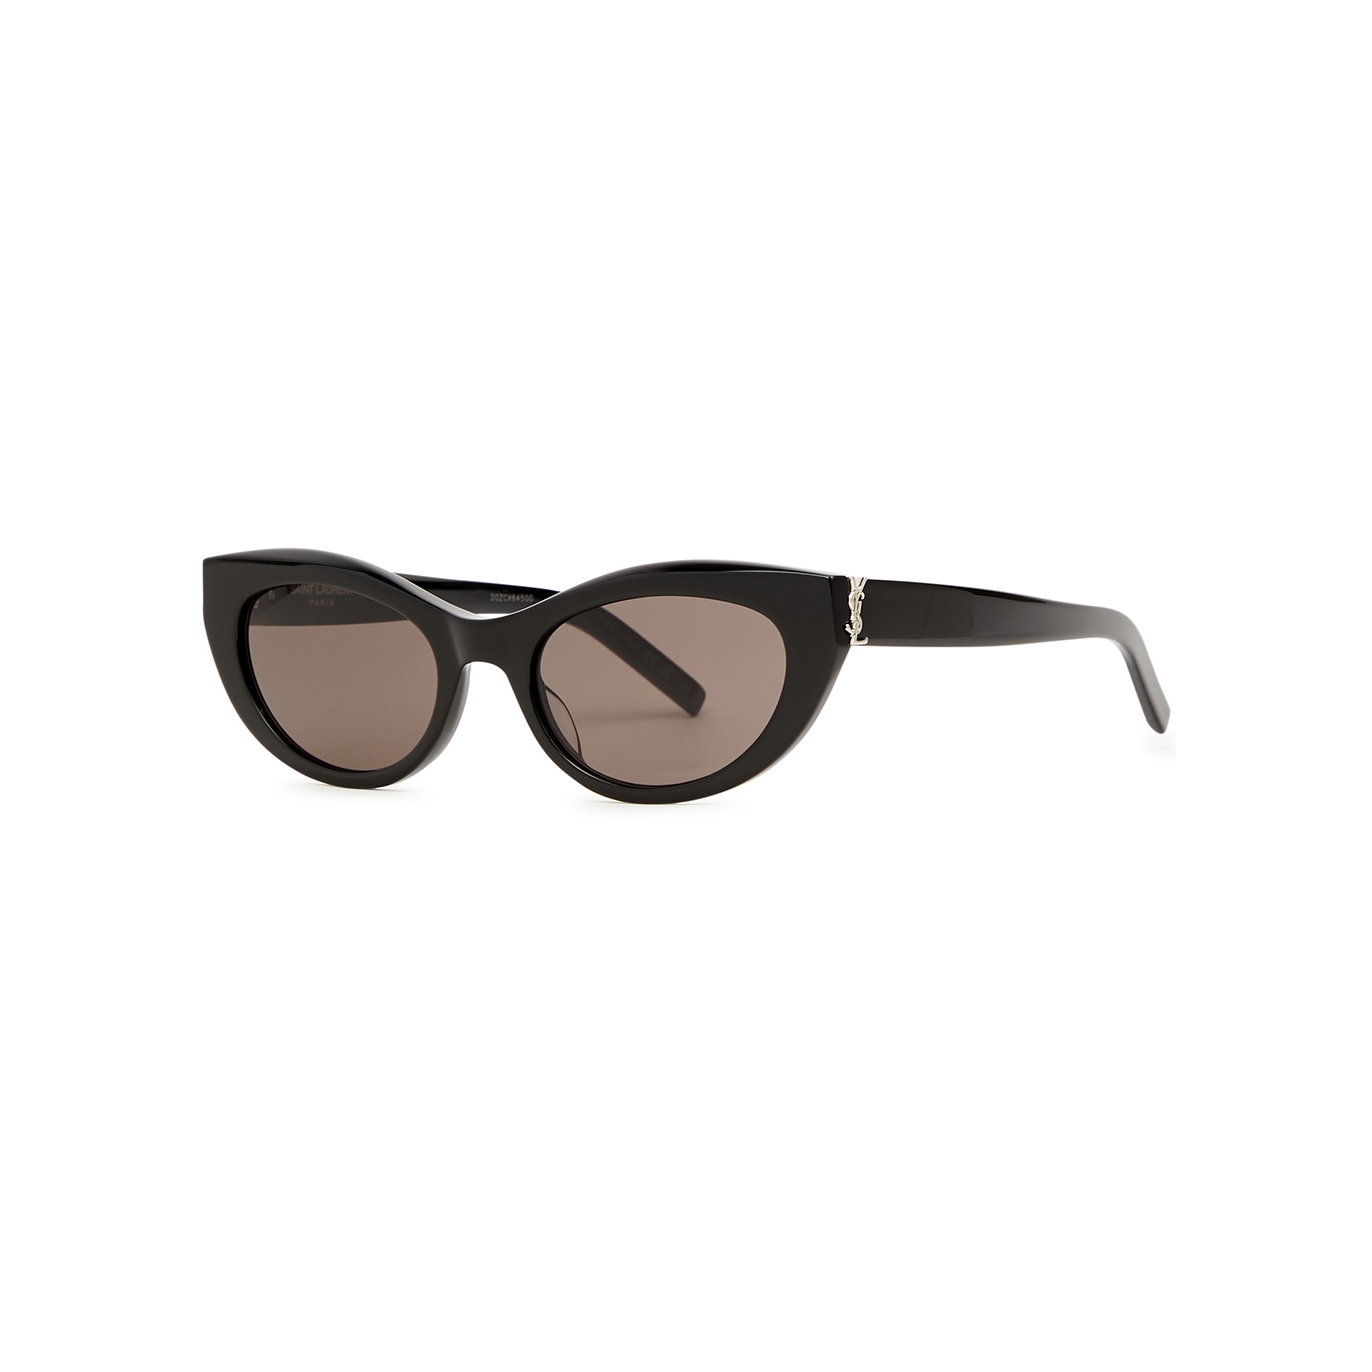 Saint Laurent Cat-eye Sunglasses - Black